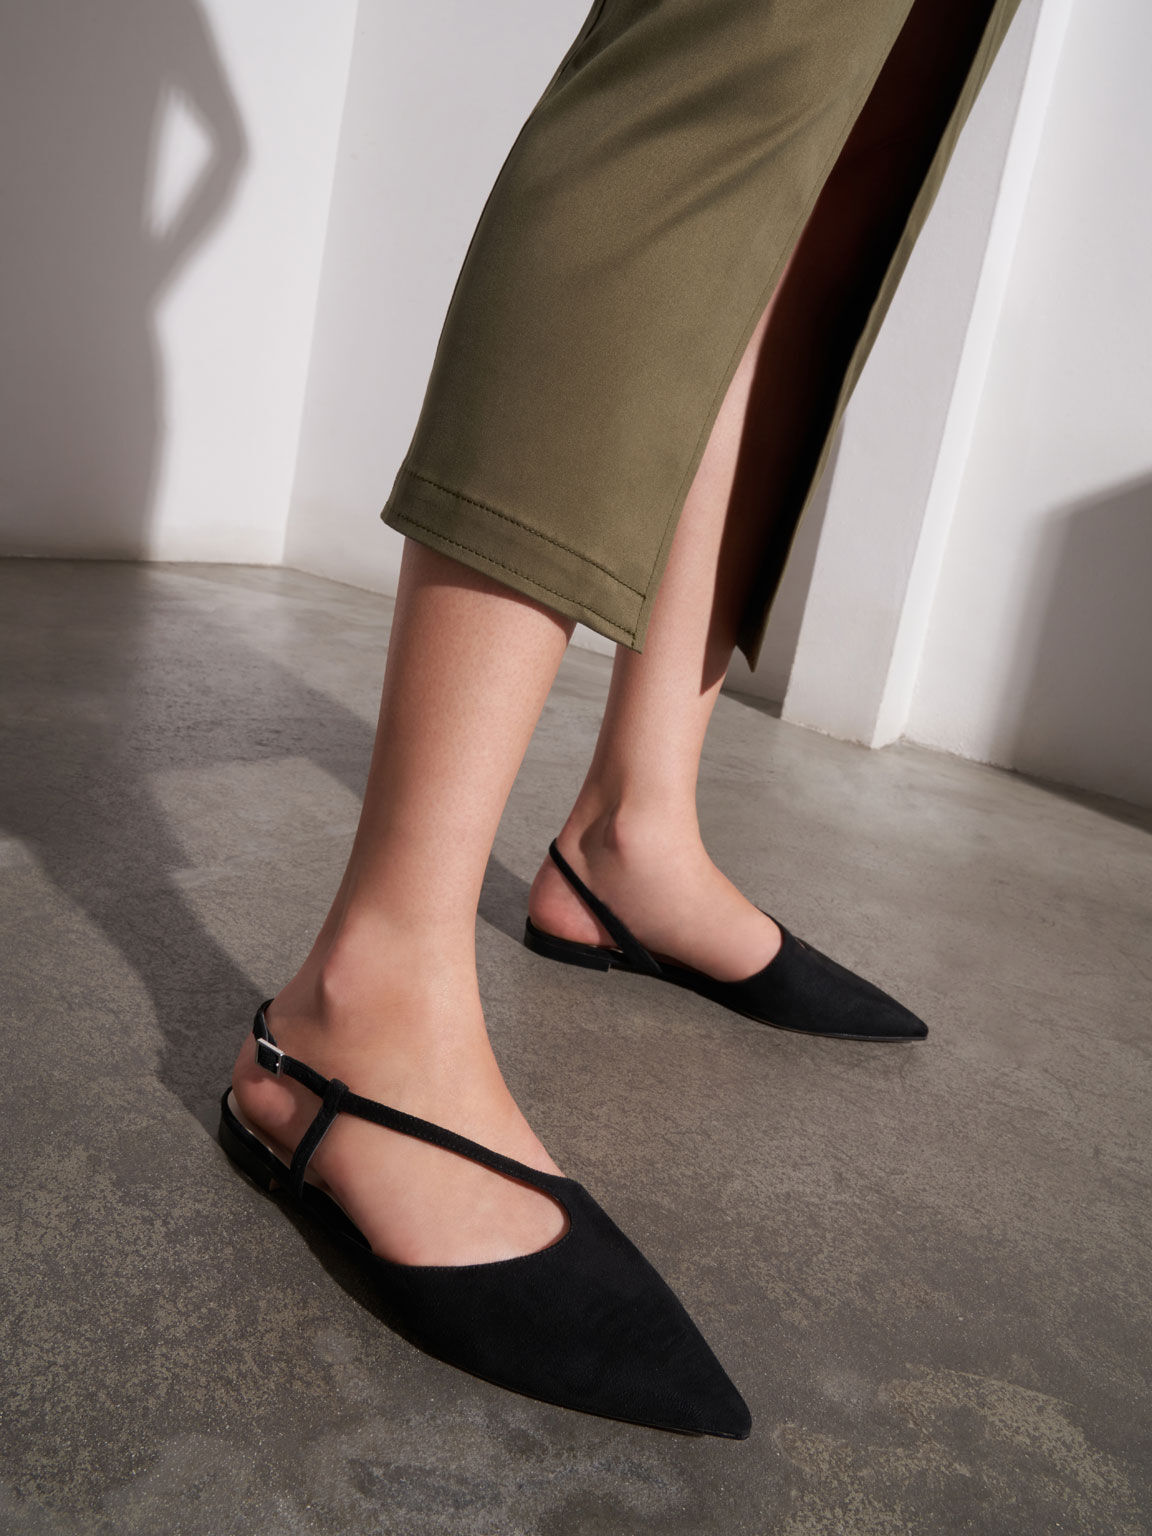 Sepatu Textured Pointed Toe Asymmetric Strap Ballerina Flats, Black Textured, hi-res